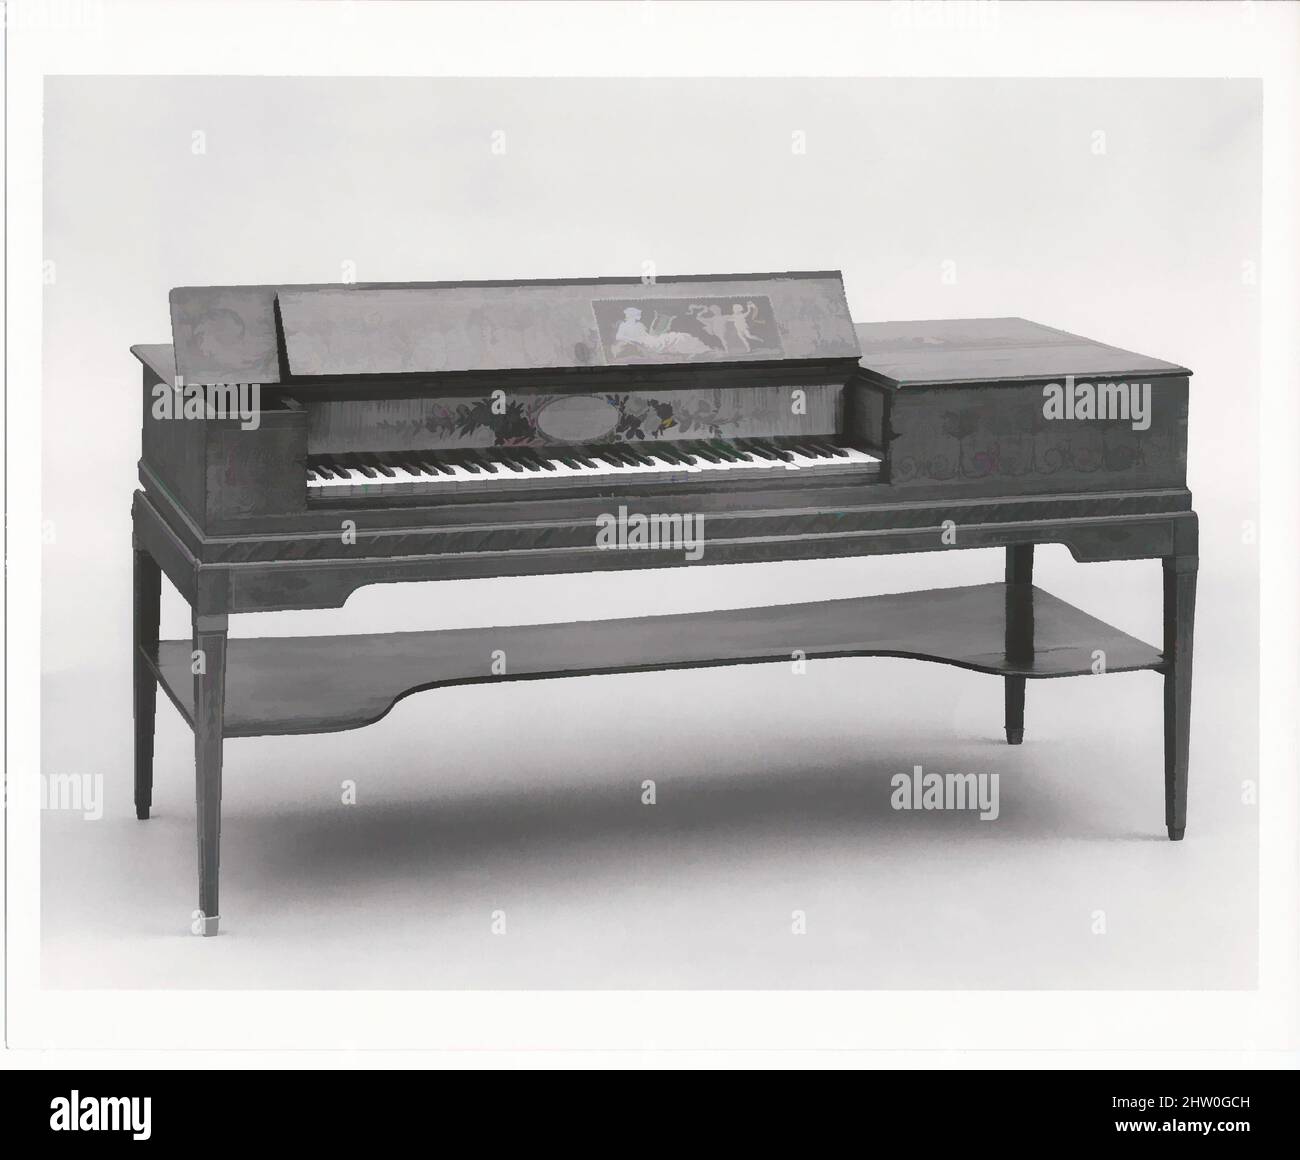 Mahogany piano hi-res stock photography and images - Alamy